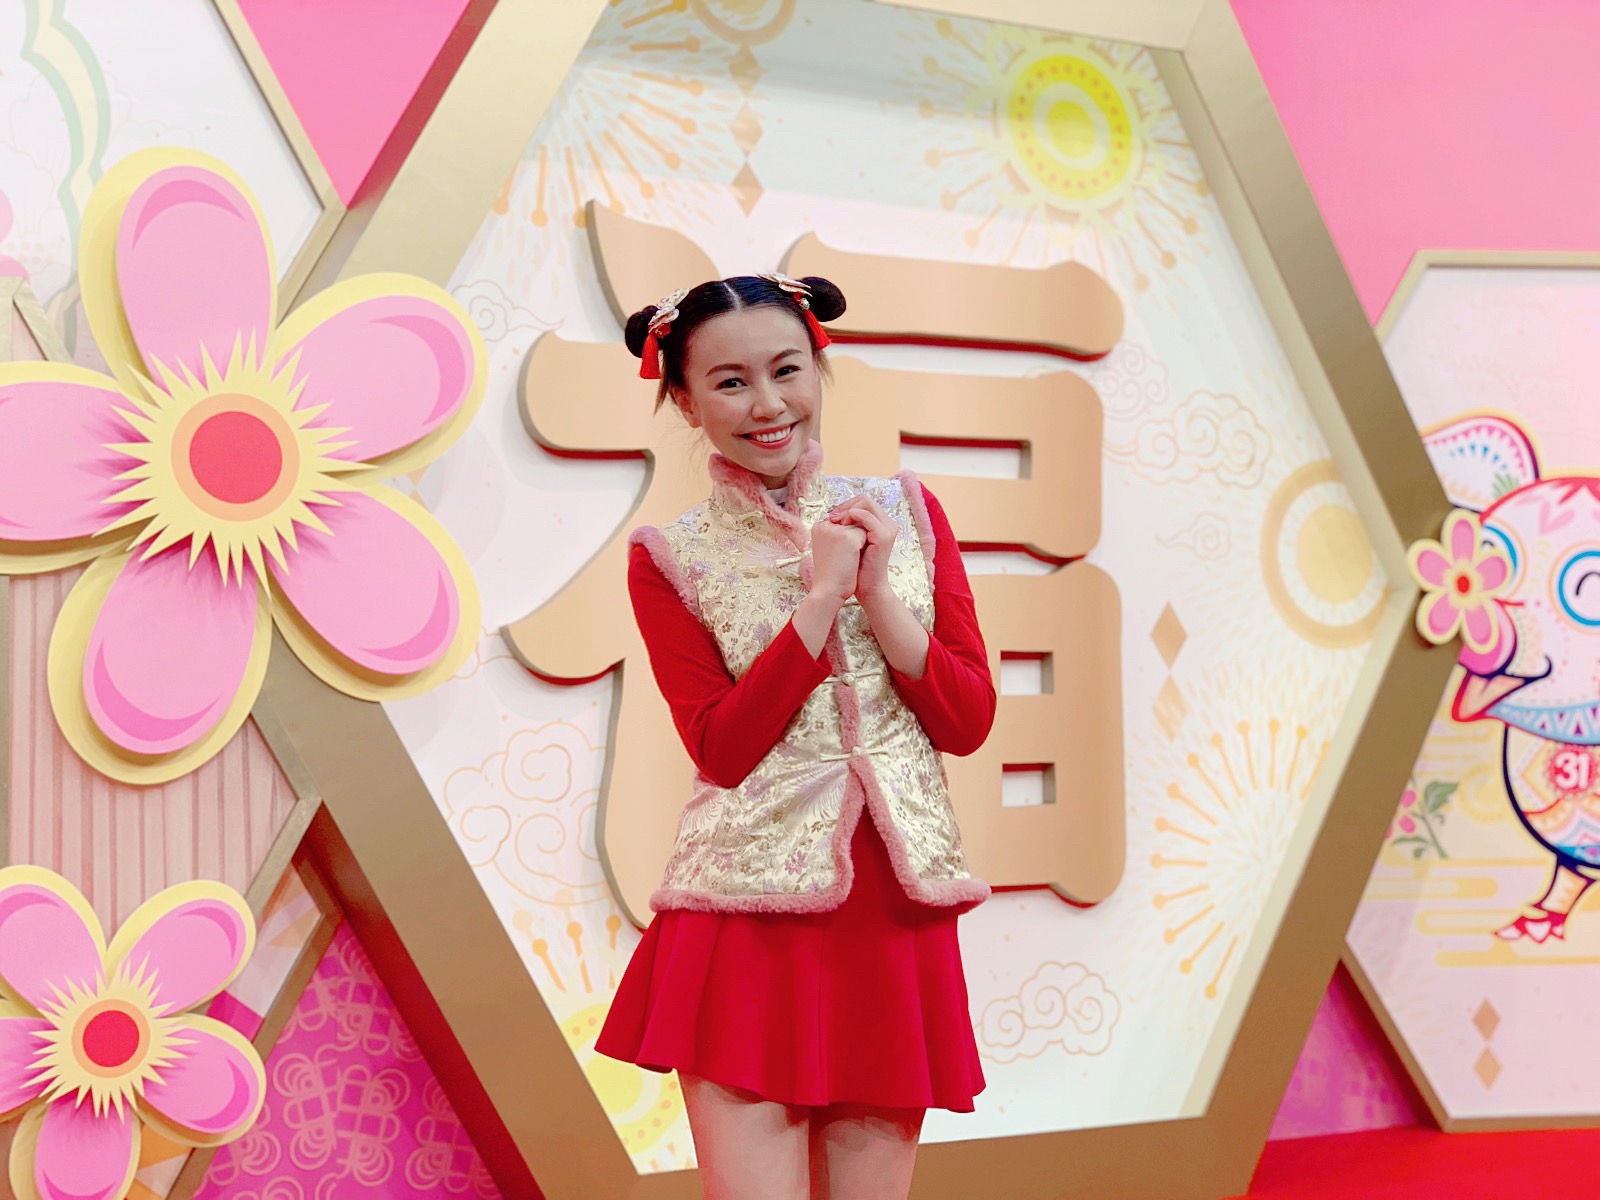 MC Jasmine Ky 何嘉慧司儀工作紀錄: 港台電視31 賀年節目「花豚錦簇喜迎春」